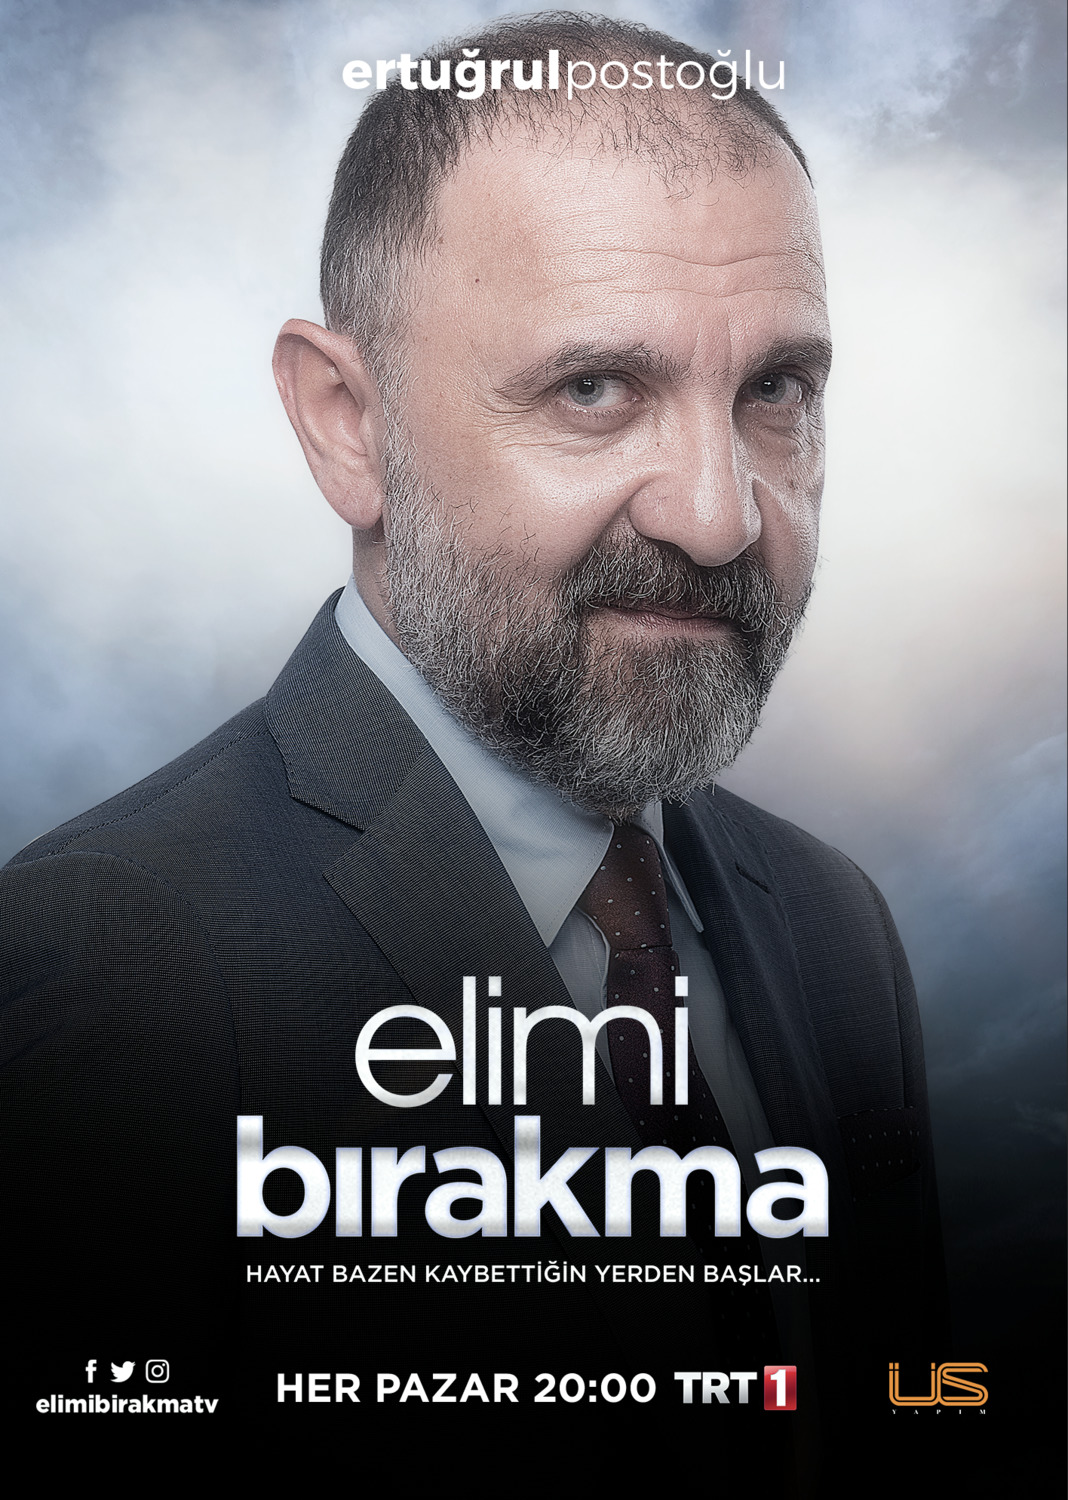 Extra Large TV Poster Image for Elimi birakma (#12 of 20)